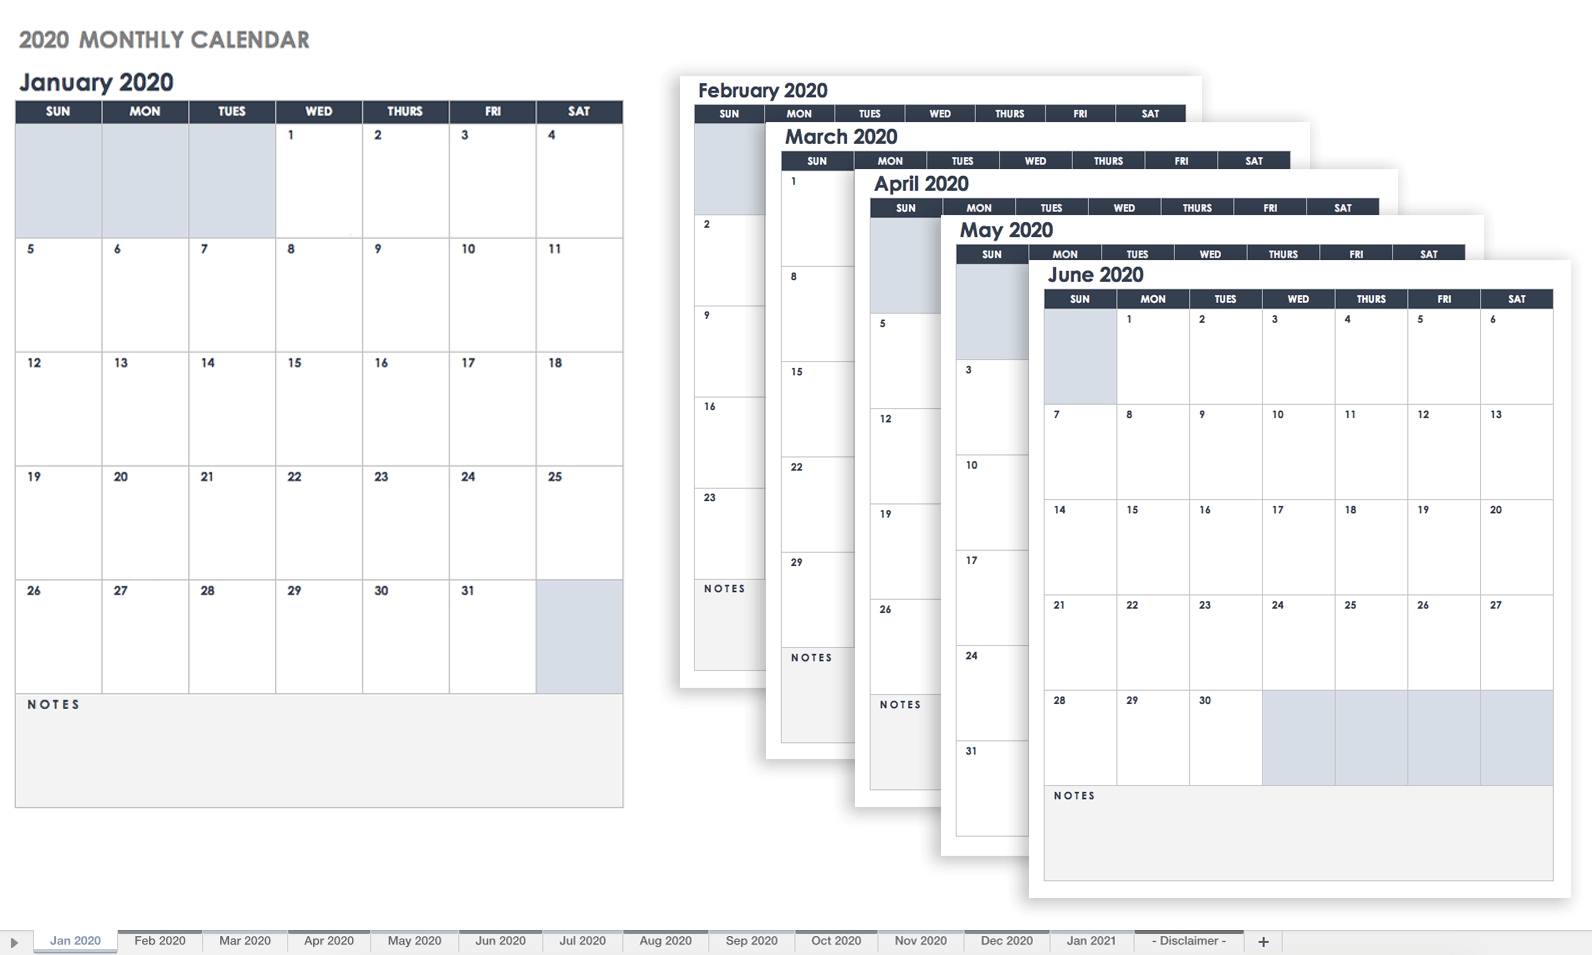 Free Google Calendar Templates | Smartsheet-Weekly Calendar 2020 Template Students 7 Days A Week